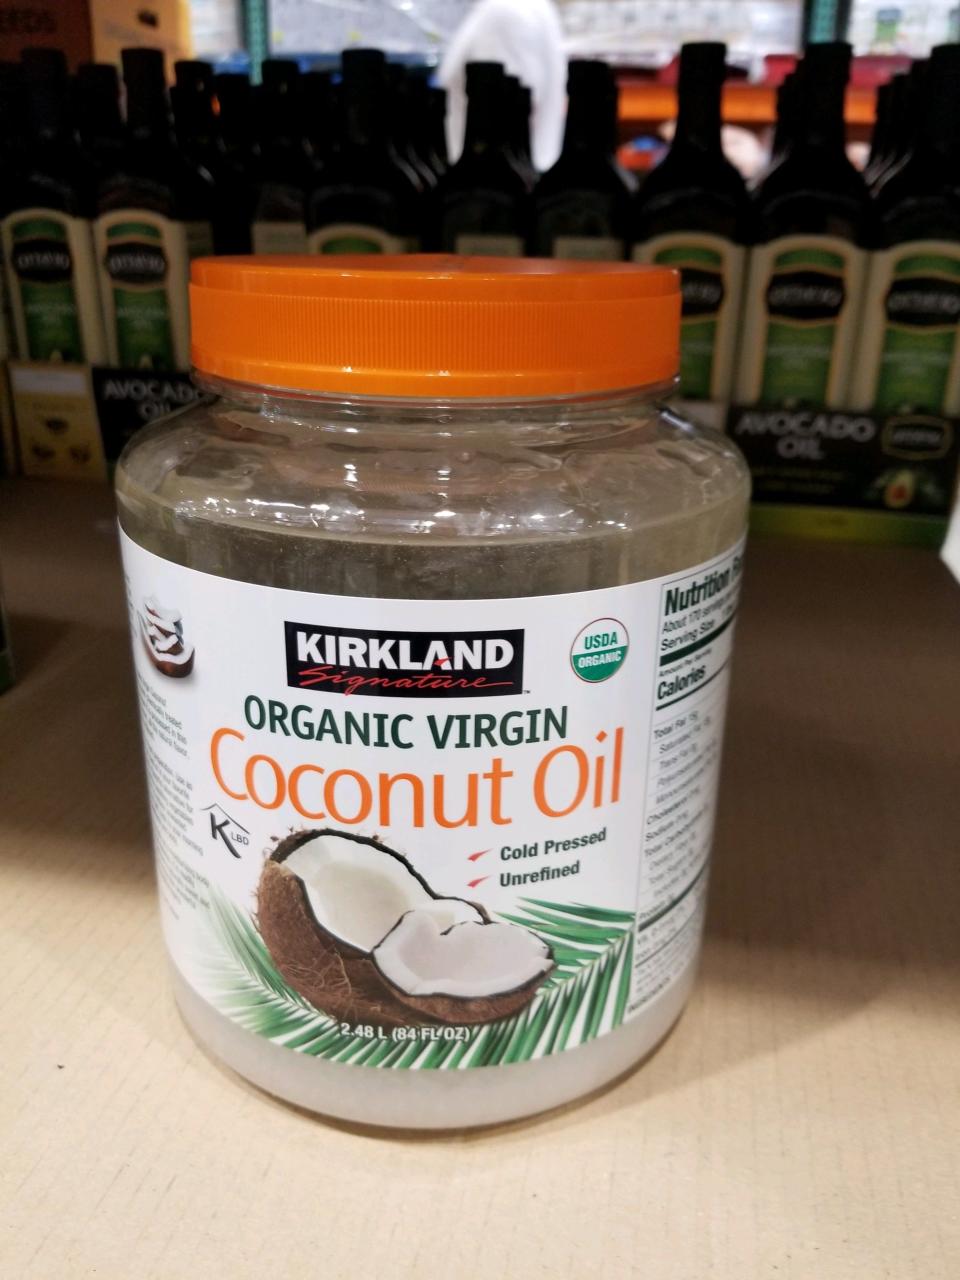 Kirkland organic virgin coconut oil